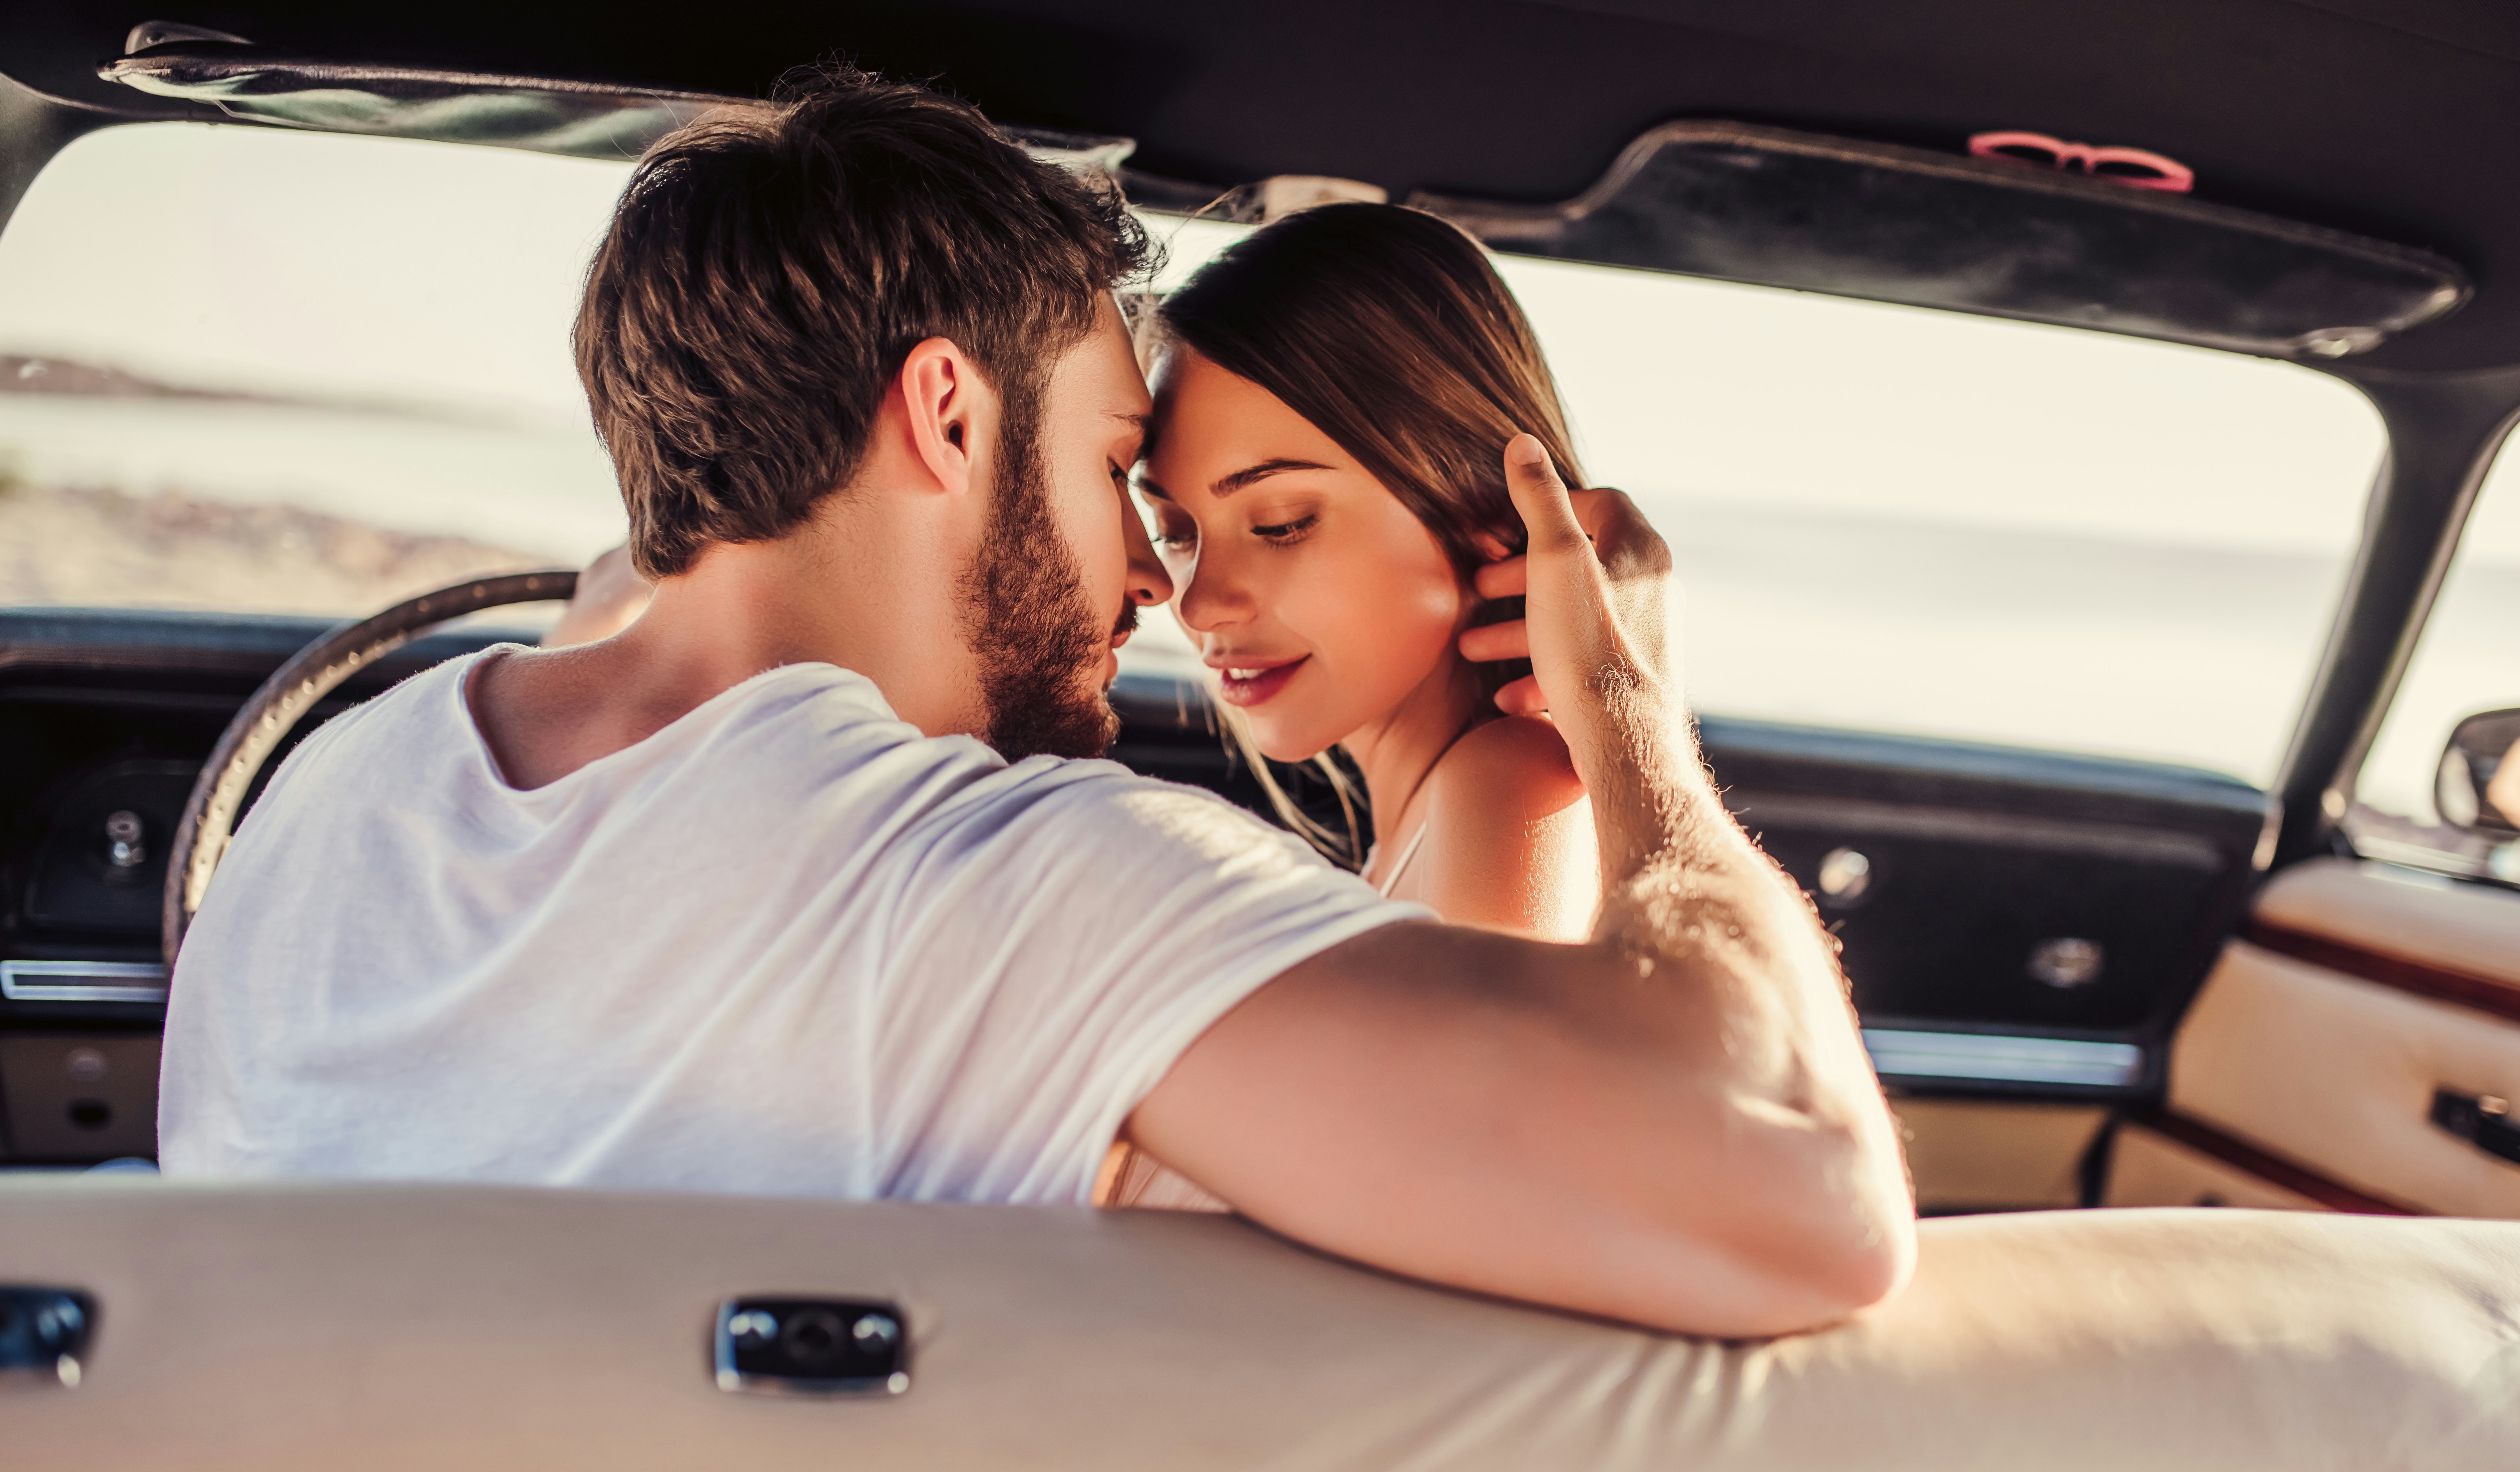 Sex In The Car Pics